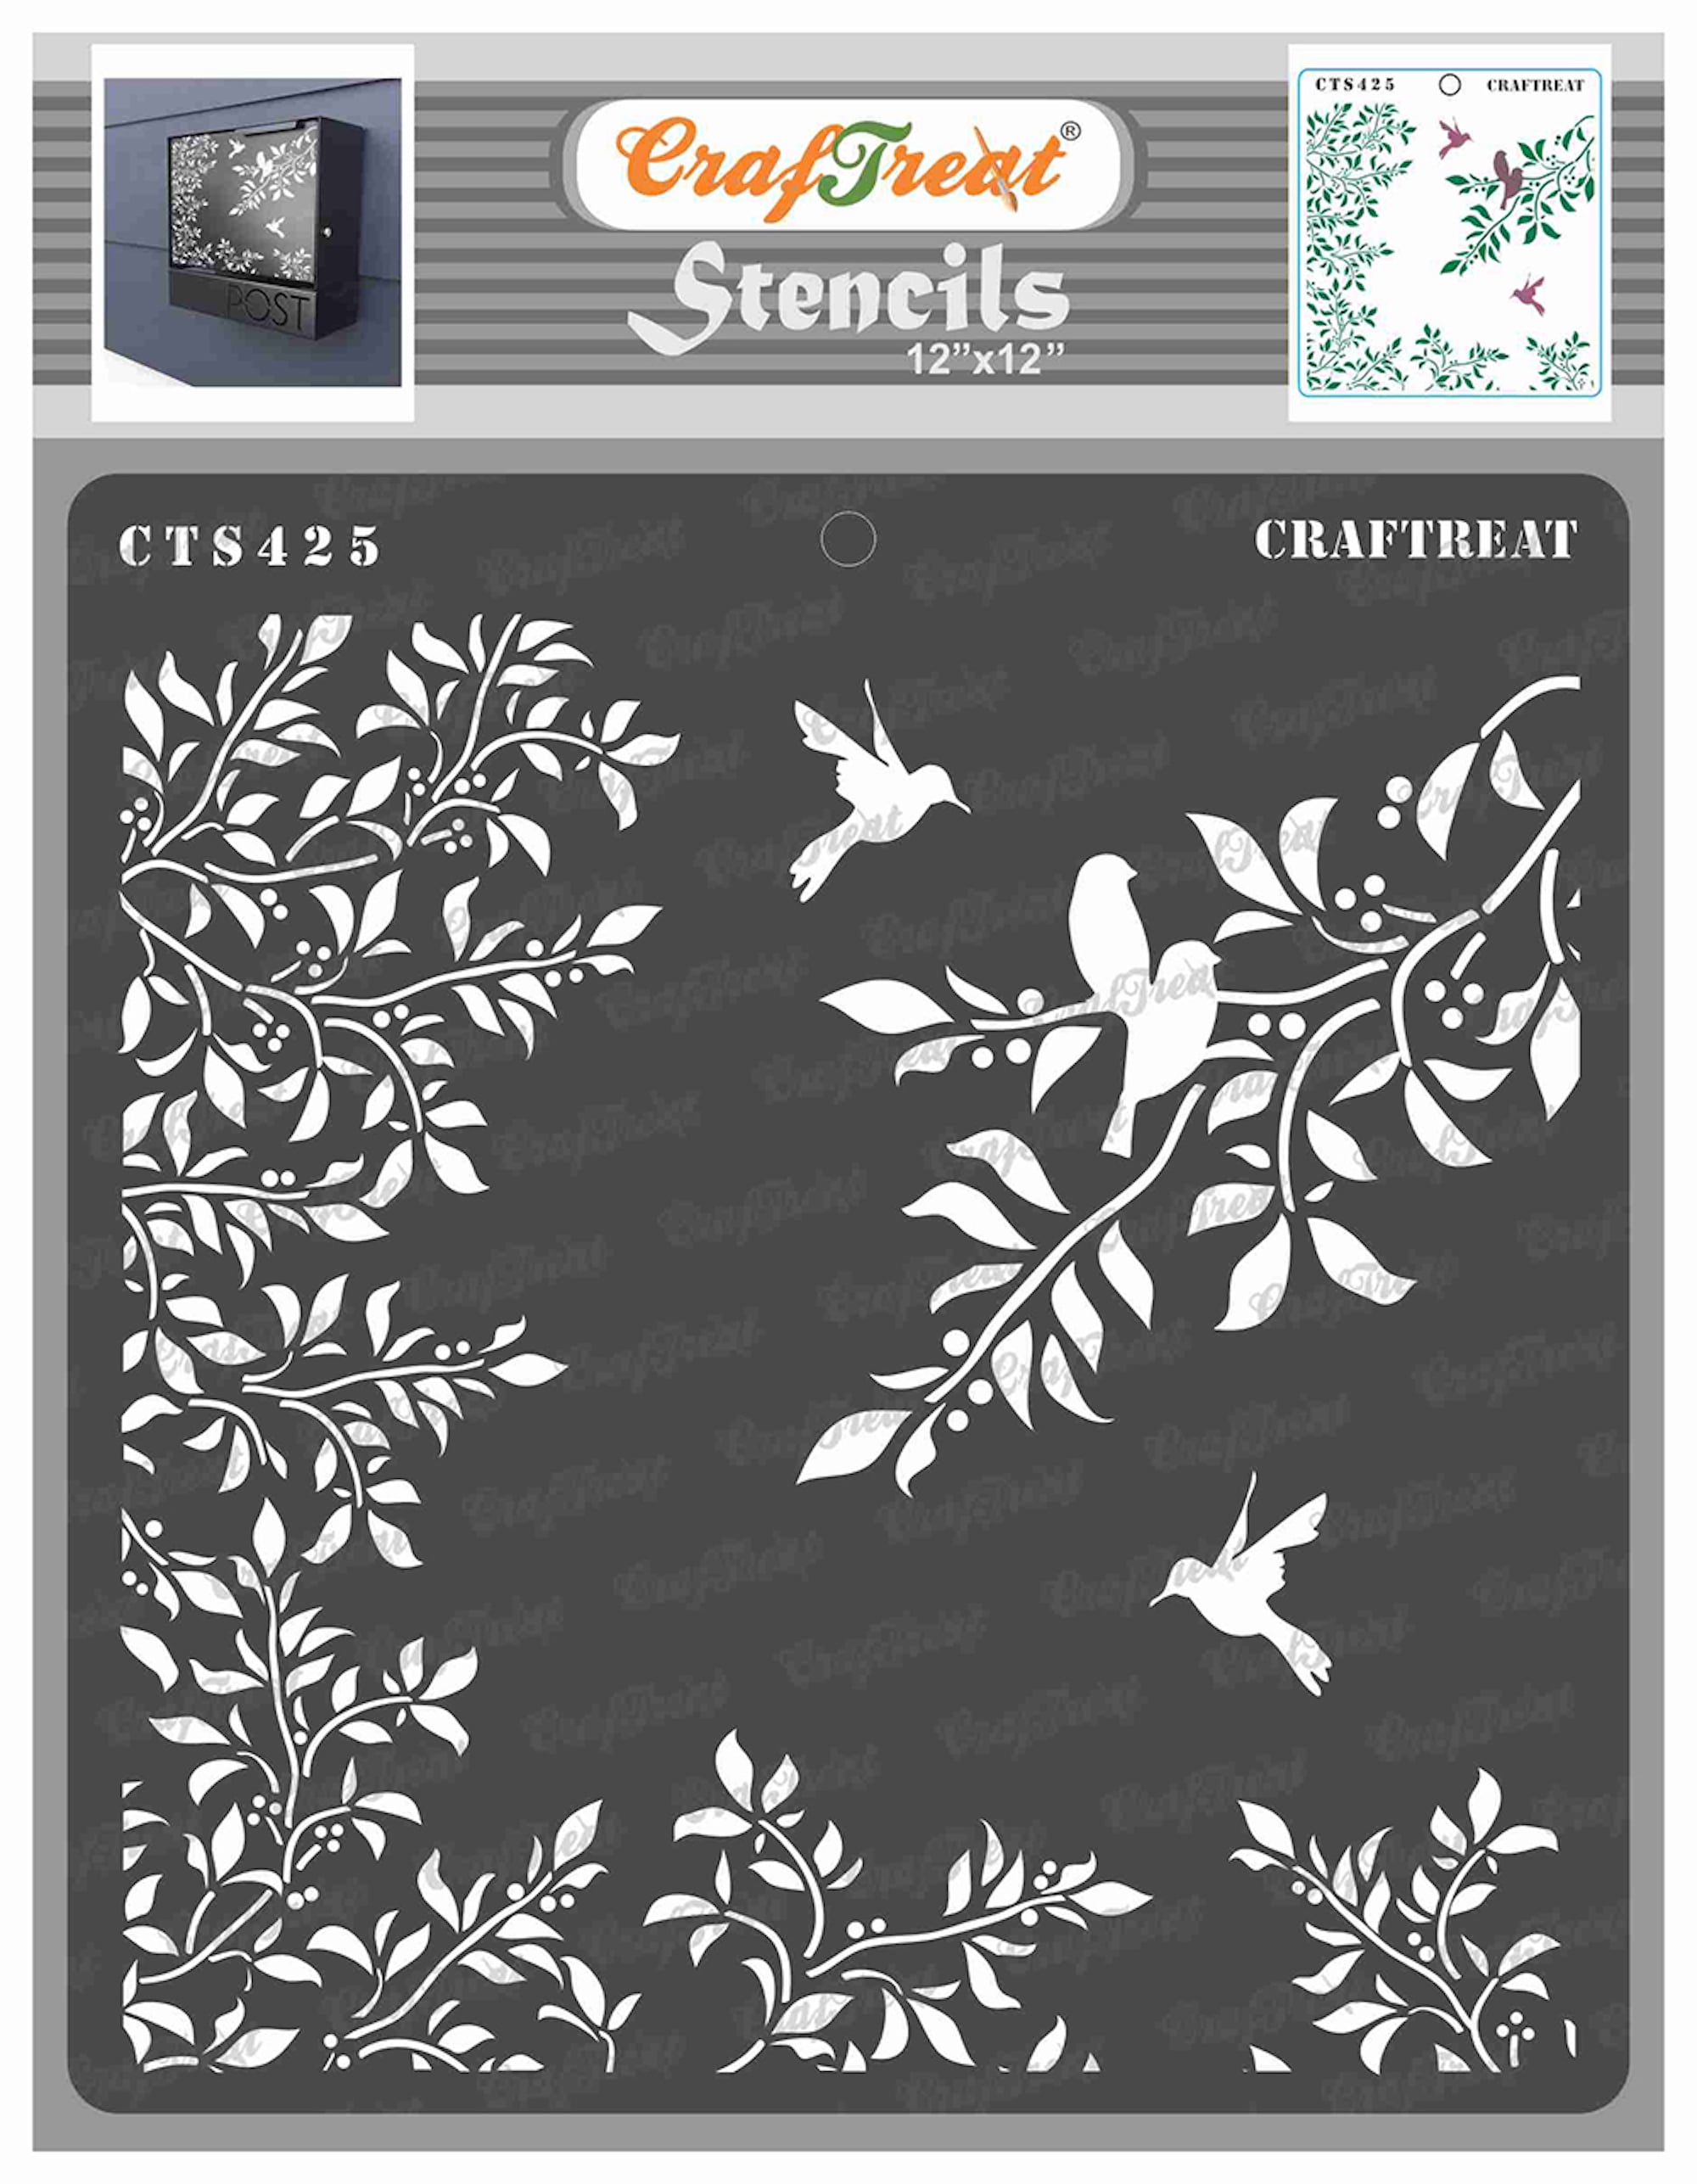 QUSENLON Self-adhesive Silk Screen Stencils Washable Printing Mesh  Transfers Reusable Art Craft Stencils for DIY Home Decorations 